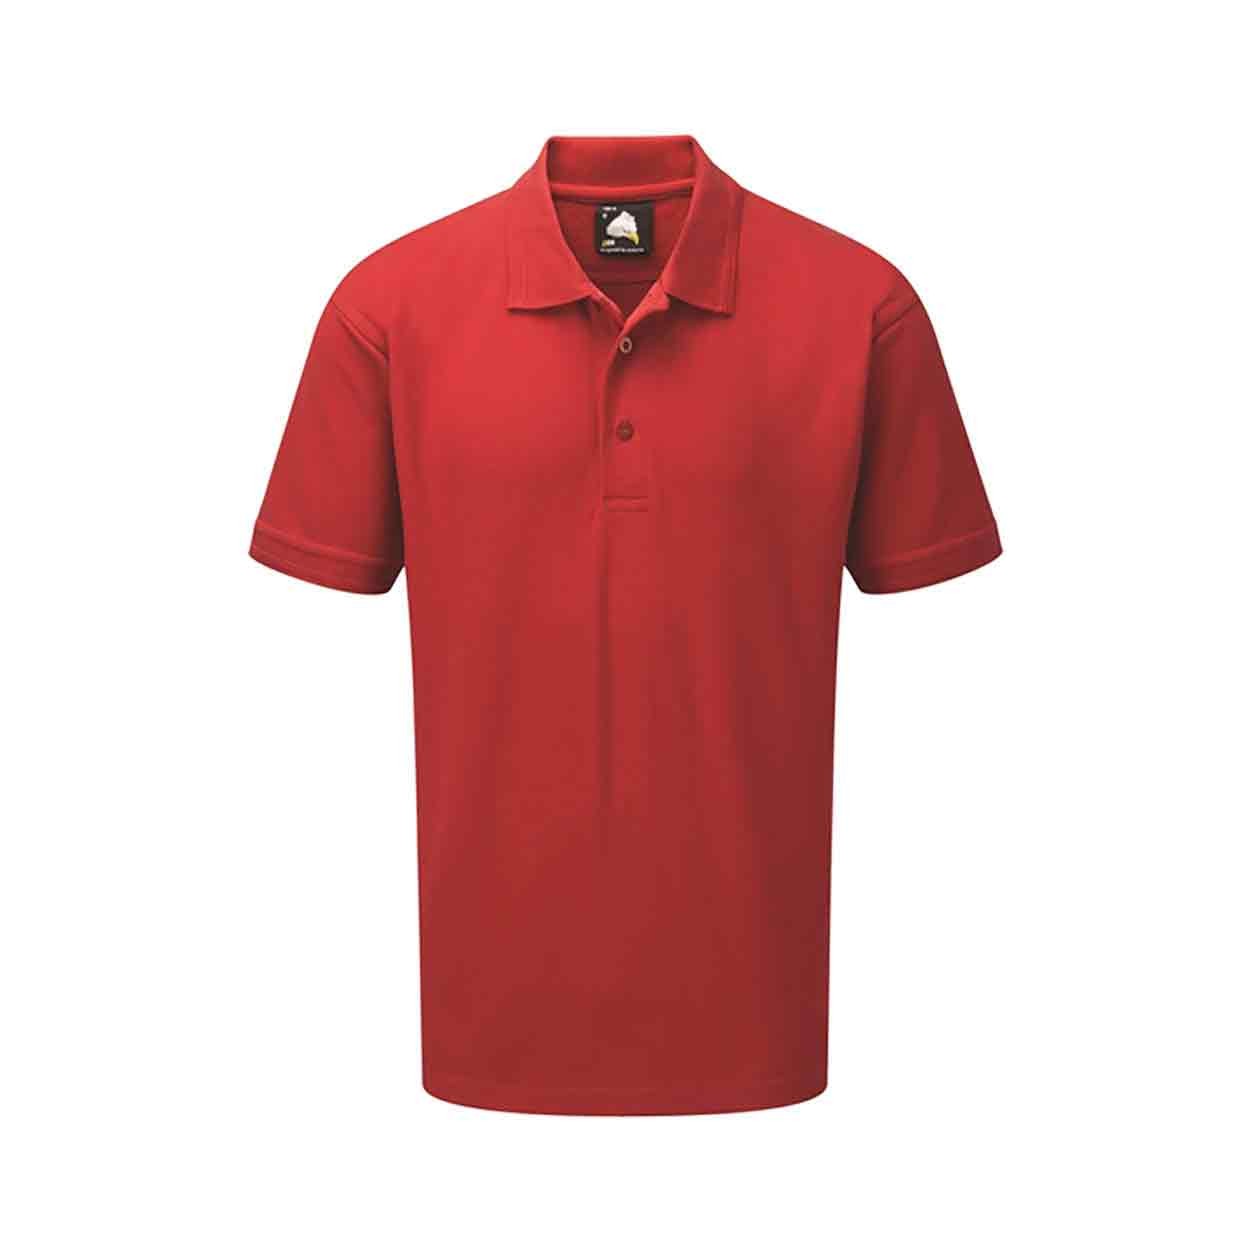 Orn 1190 Oriole Polyester Poloshirt - High Performance / Workwear Polo  Shirts - PolyCotton Polo Shirts - Mens Polo Shirts - Polo Shirts -  Leisurewear - Best Workwear